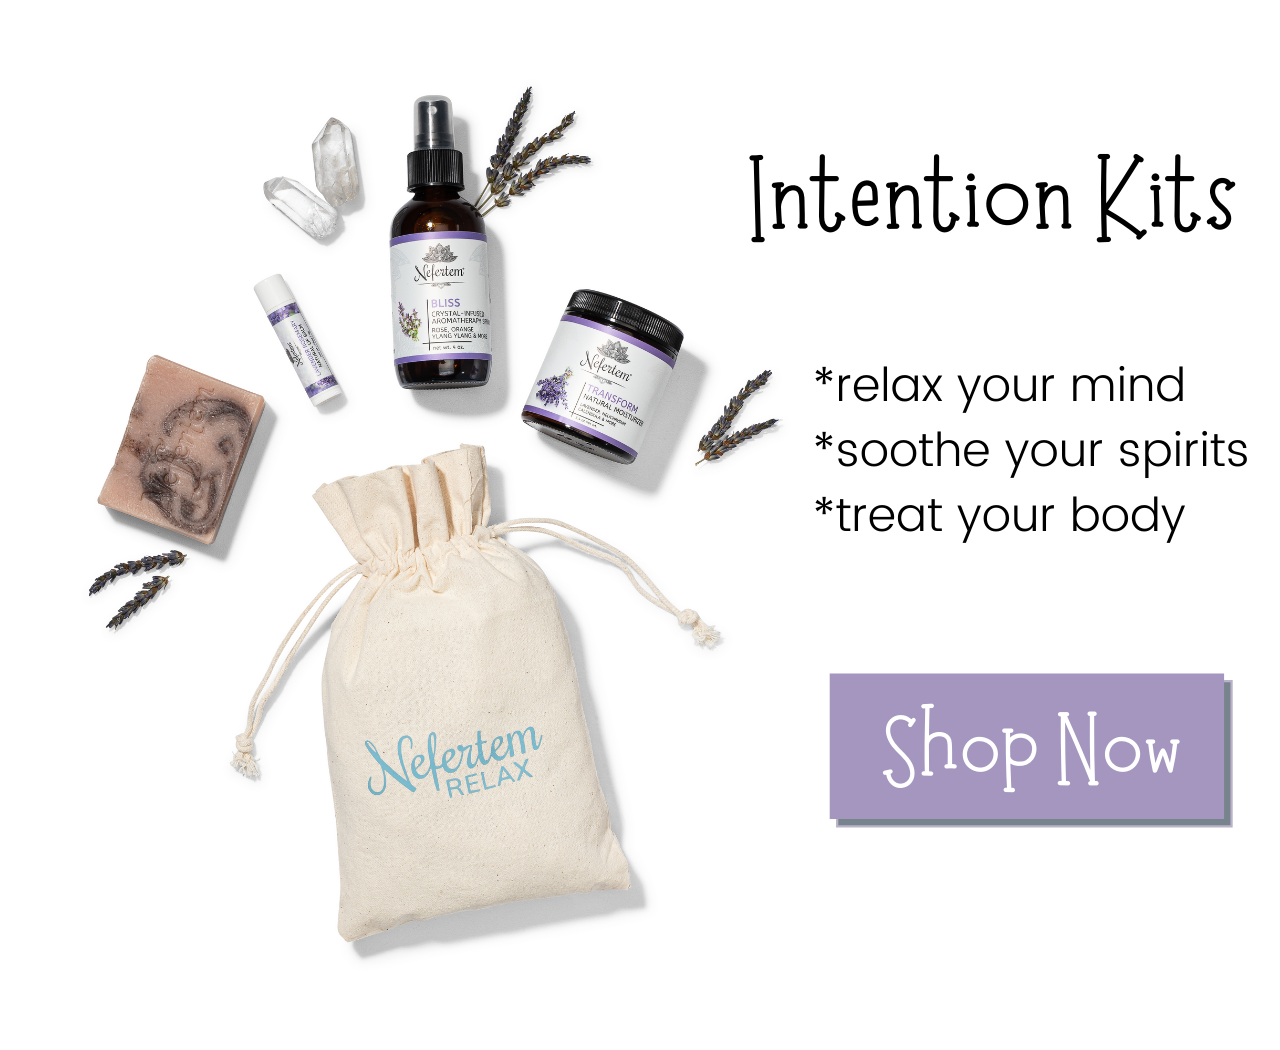 Intention kits by Nefertem holistic skincare